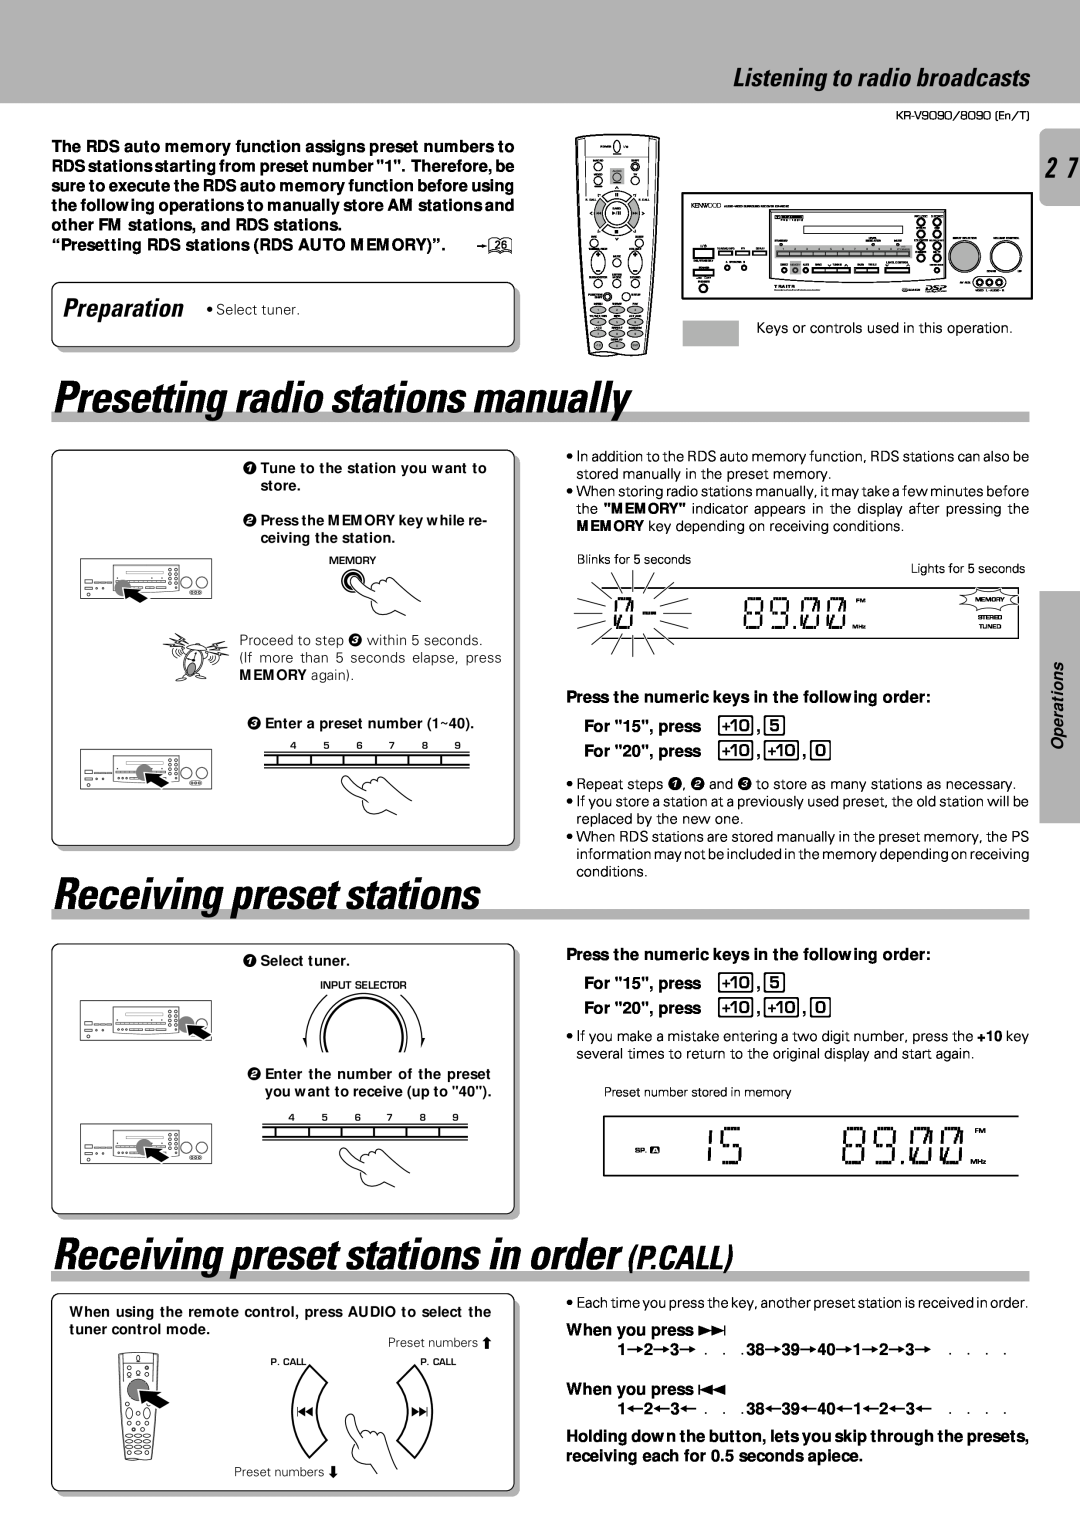 Kenwood KR-V8090, KR-V9090 Presetting radio stations manually, Receiving preset stations in order P.CALL, 89.MHz 